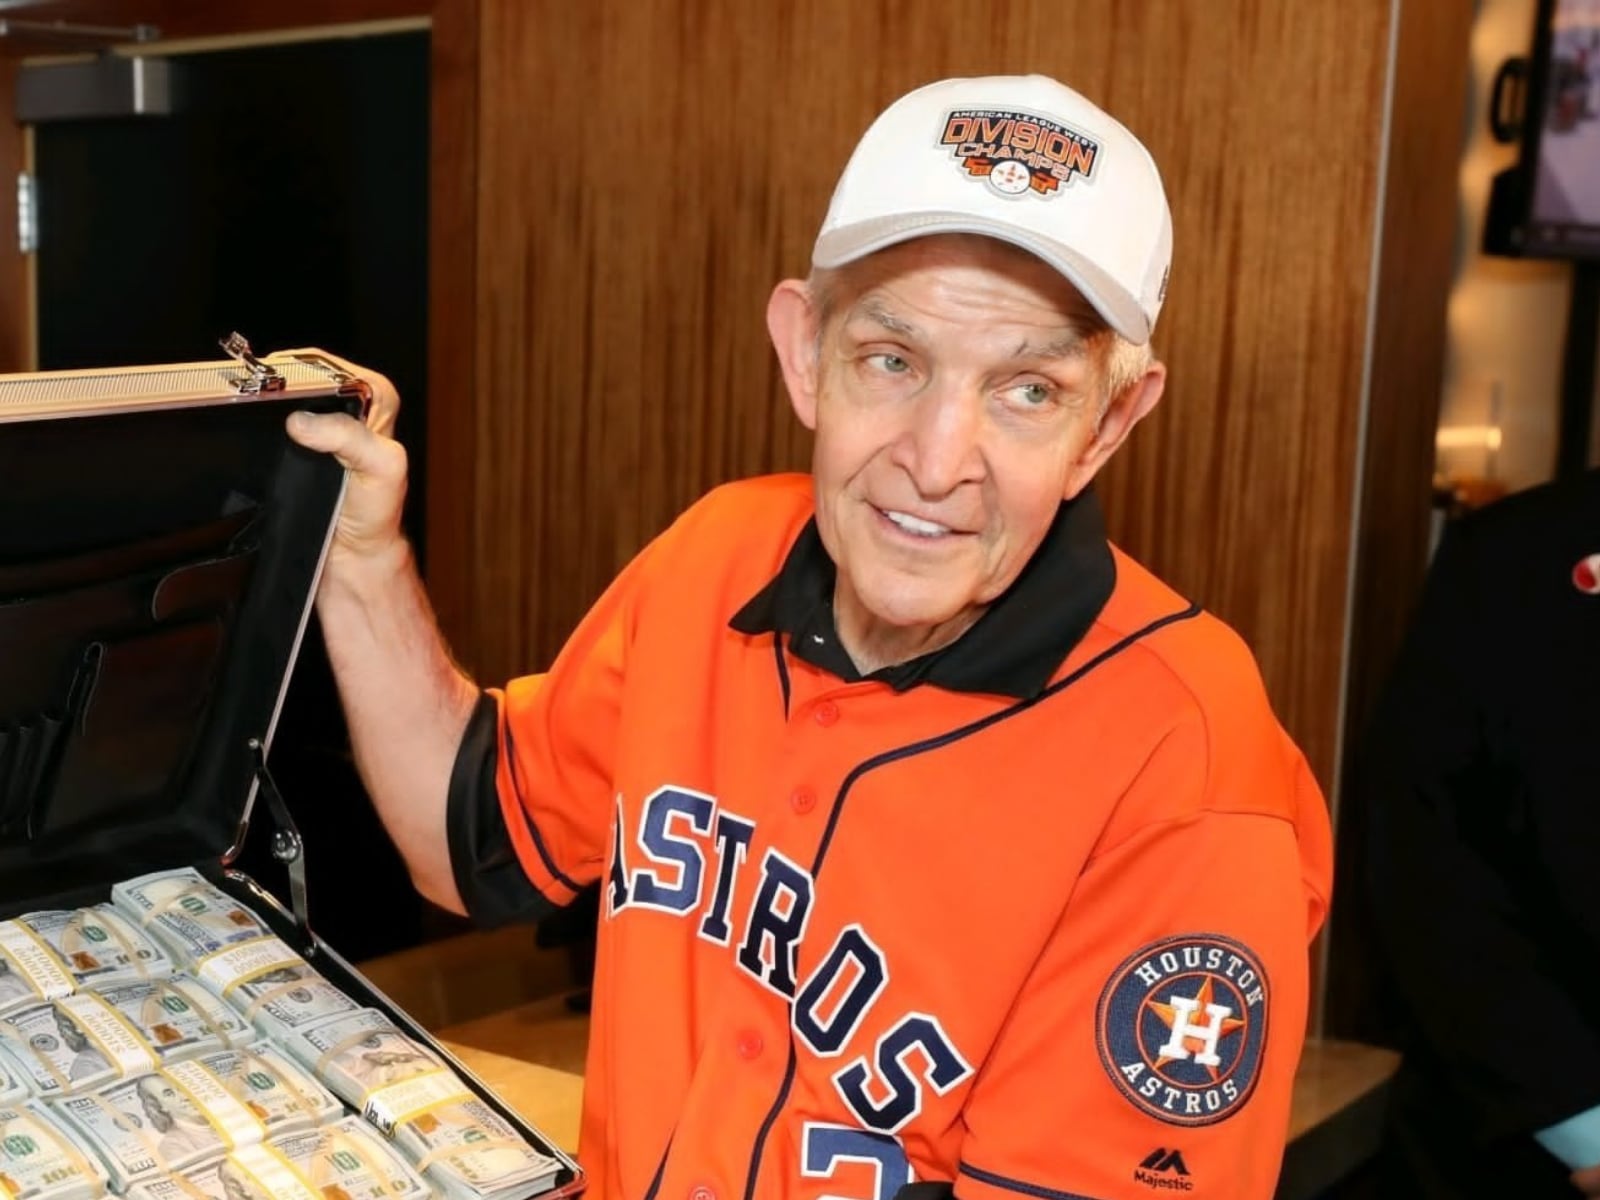 Gambler 'Mattress Mack' to collect $4.3 million if Astros win